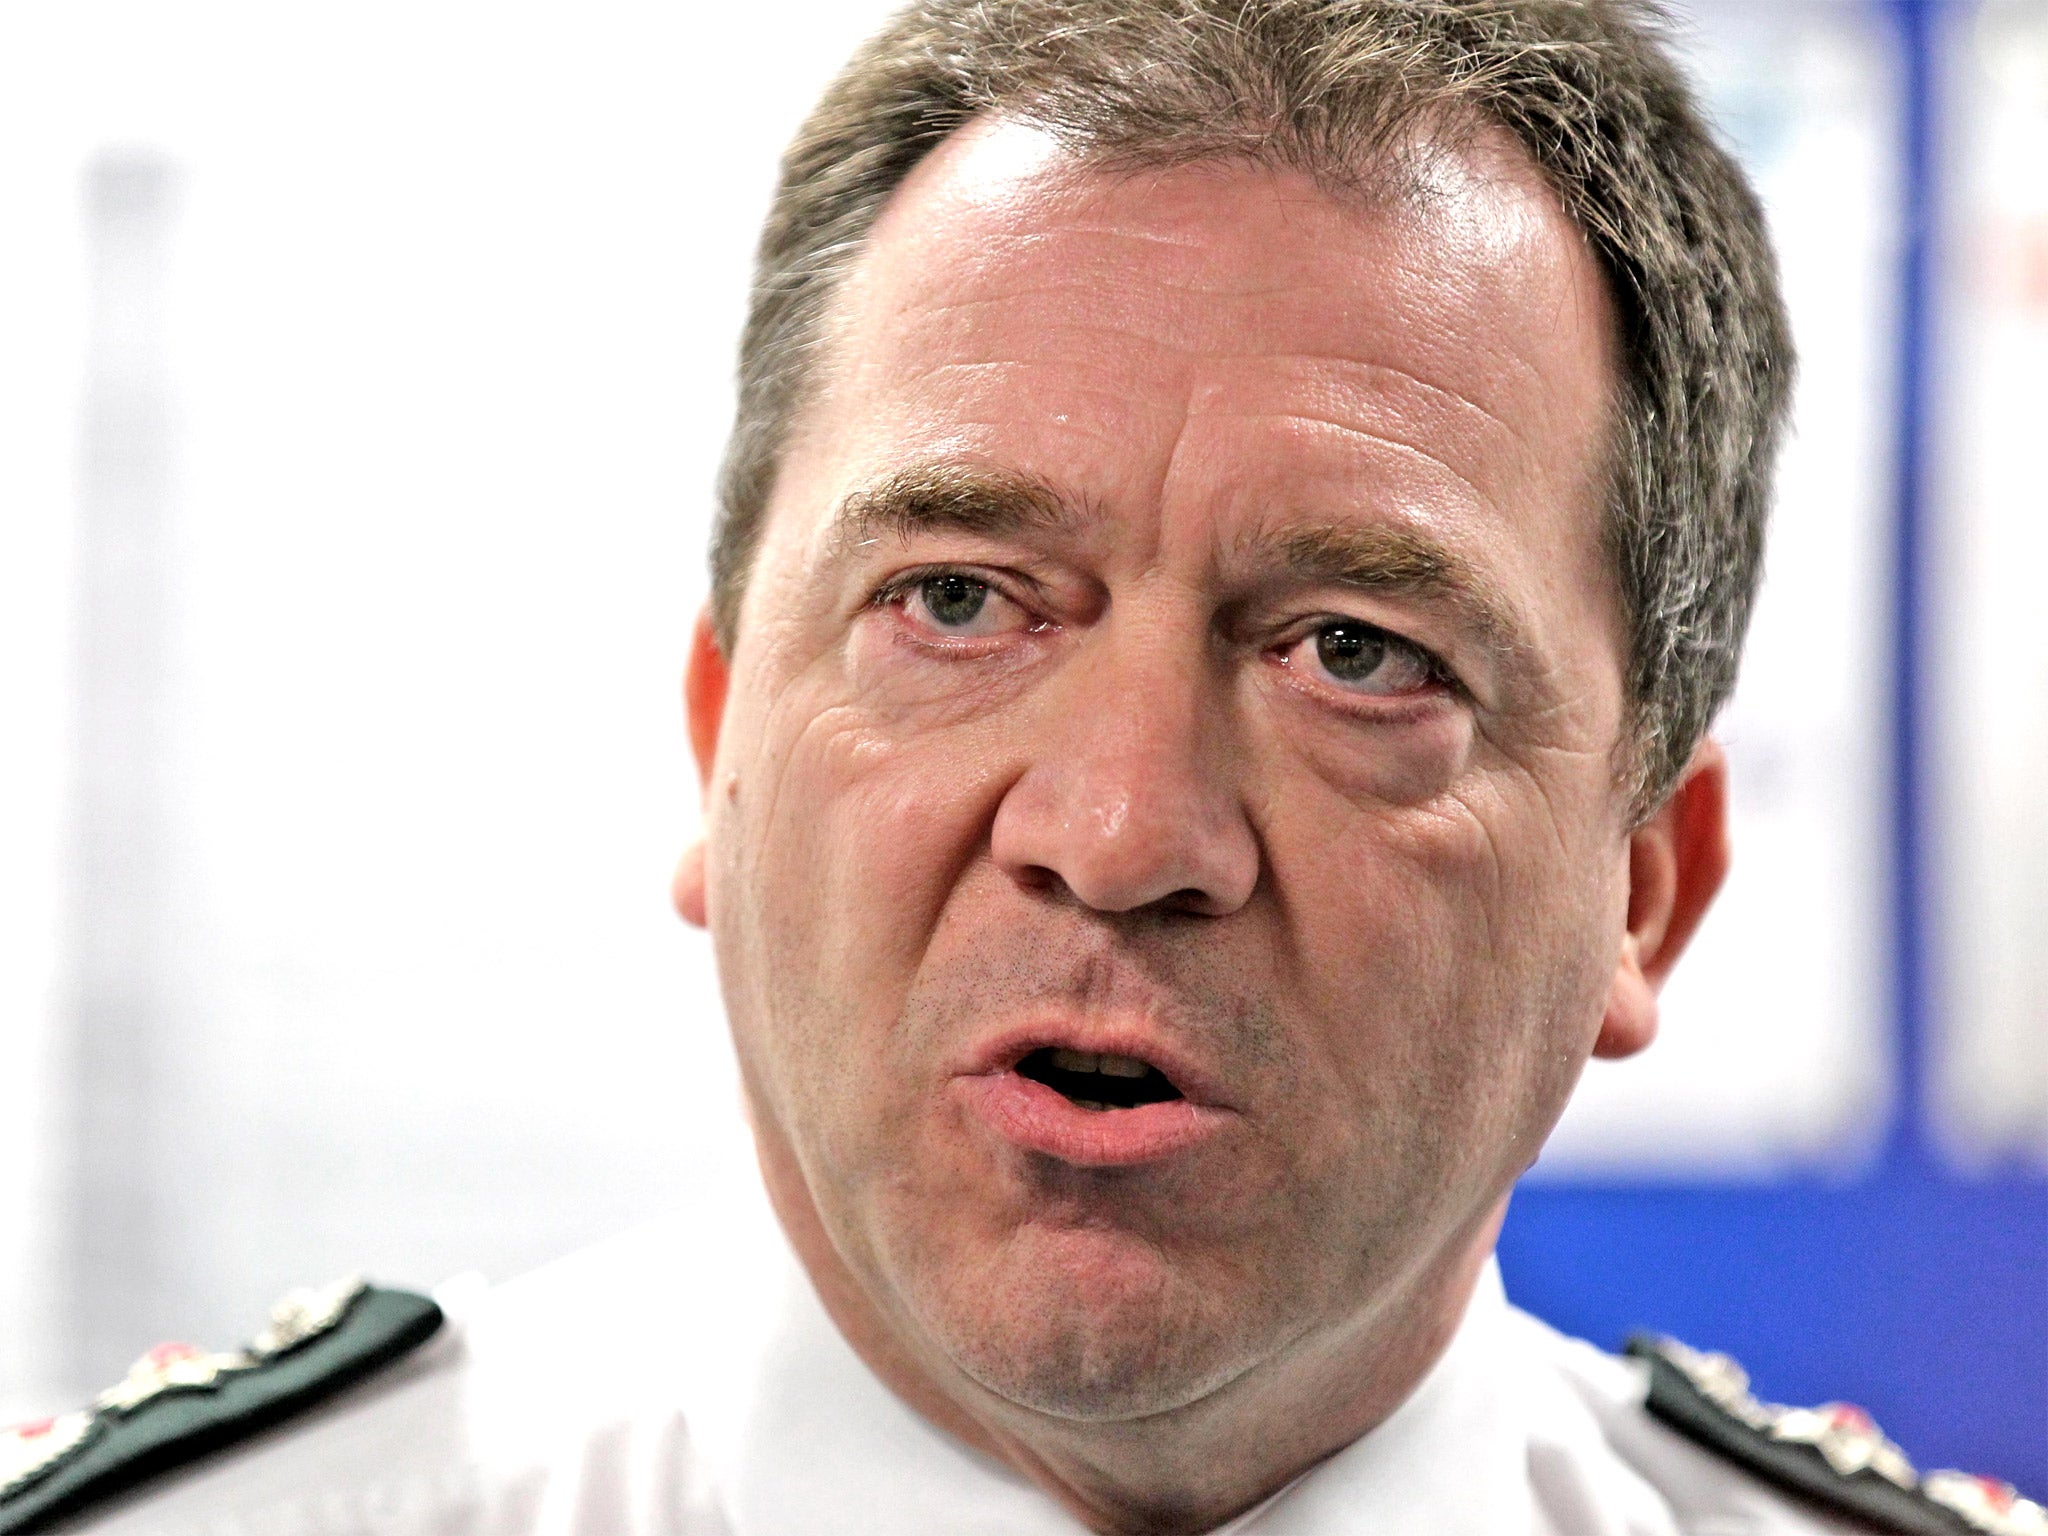 Matt Baggott, Chief Constable of the Police Service of Northern Ireland